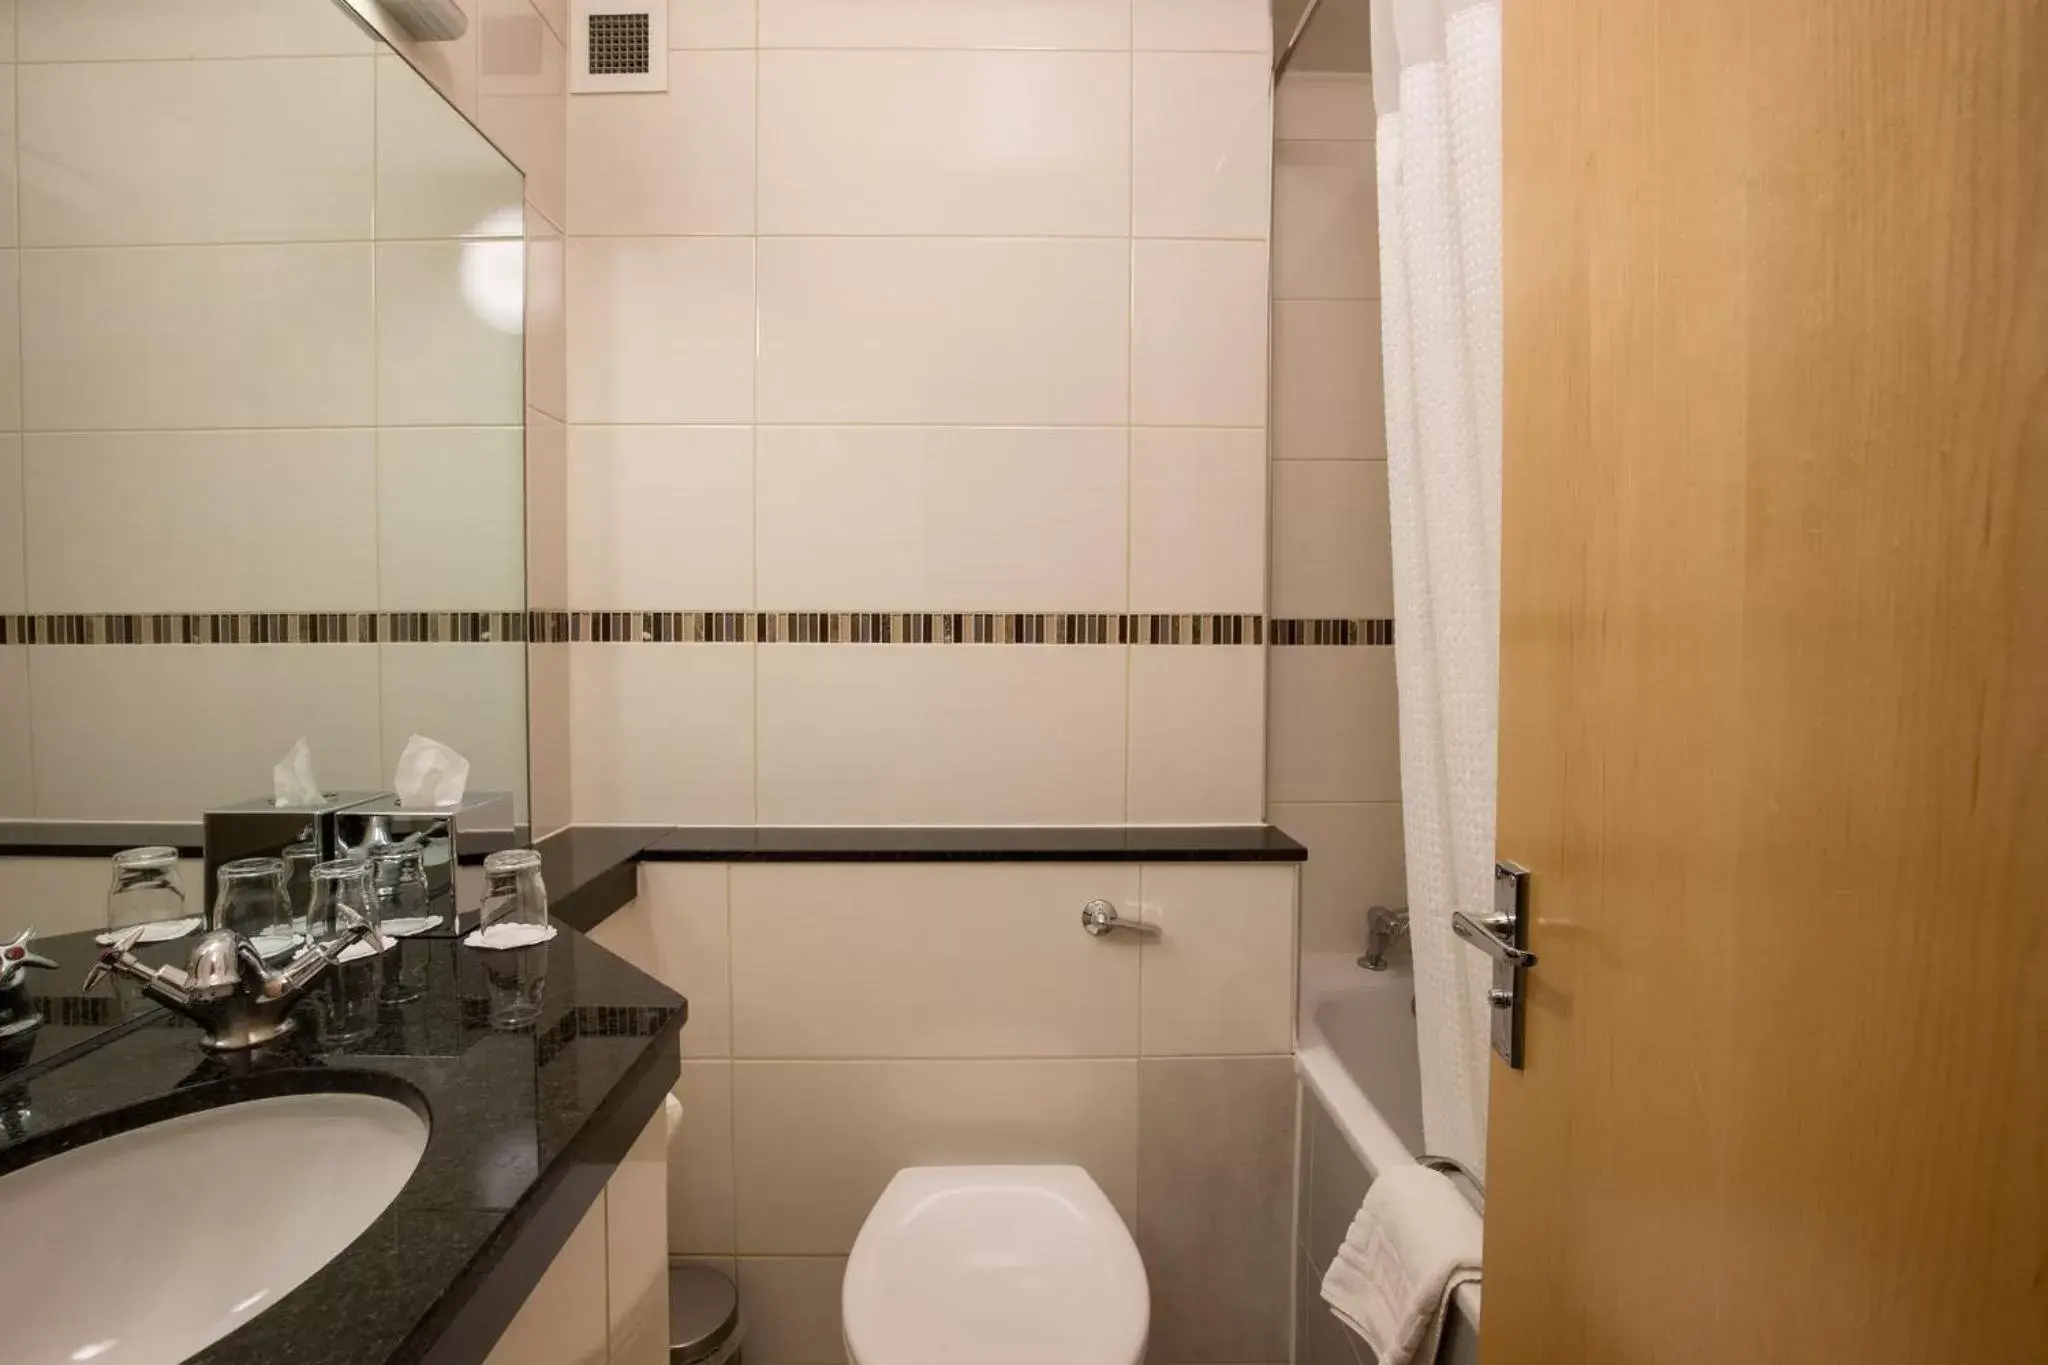 Photo of the whole room, Bathroom in Tavistock Hotel